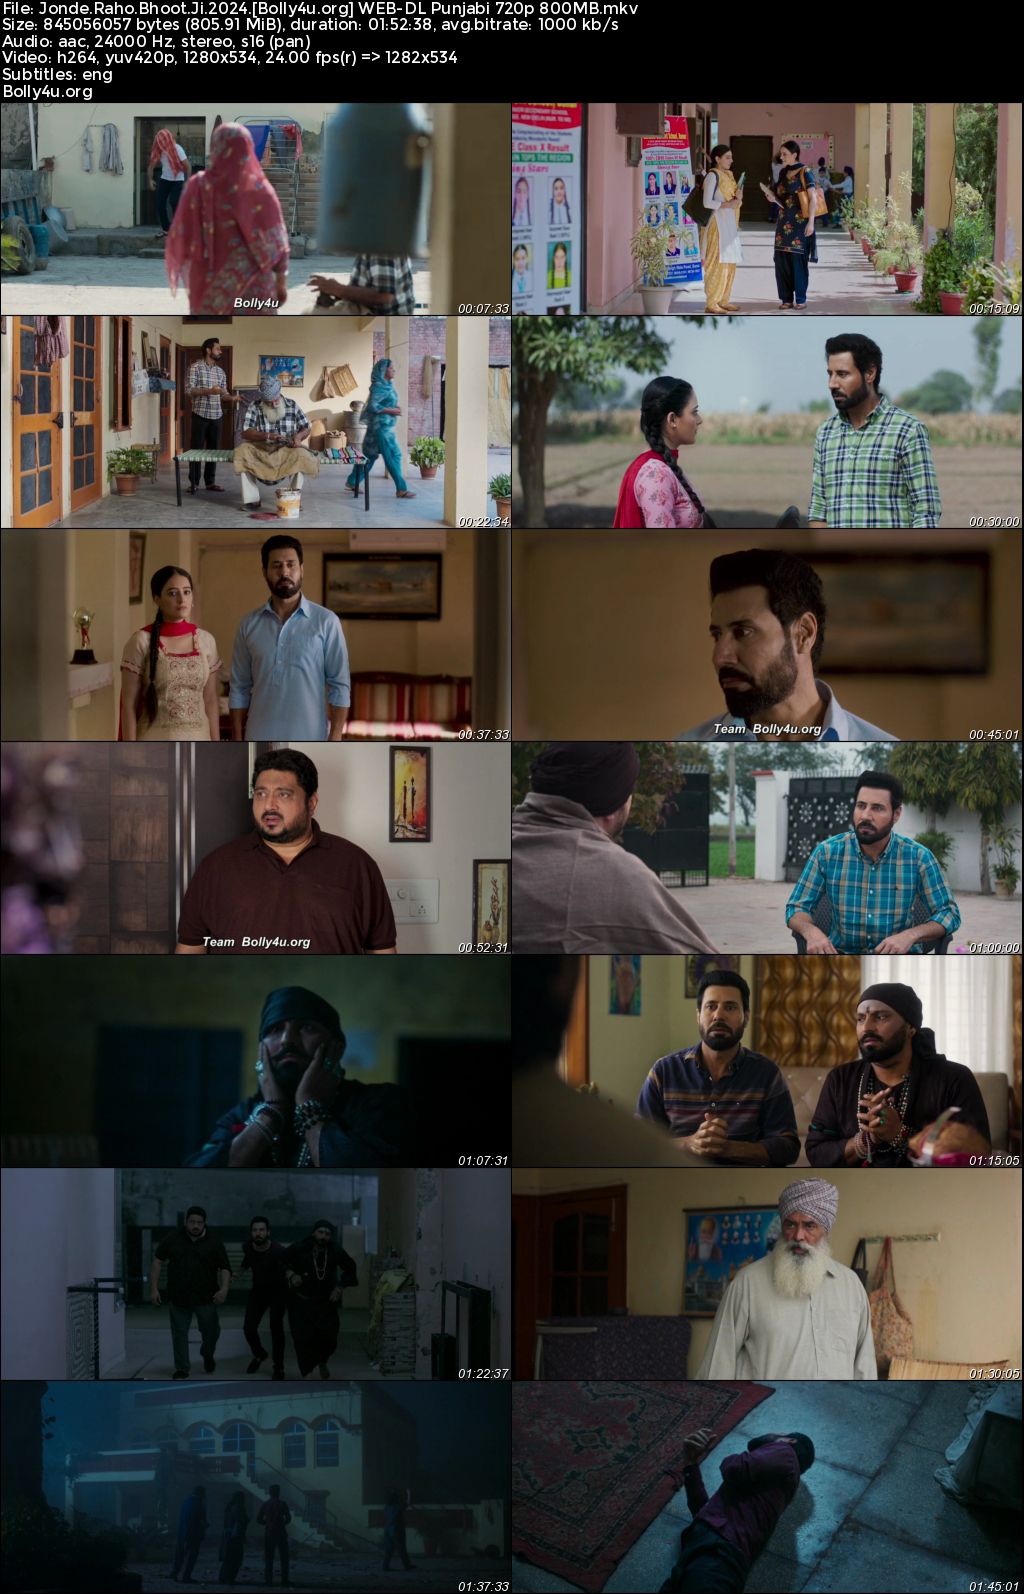 Jeonde Raho Bhoot Ji 2024 WEB-DL Punjabi Full Movie Download 1080p 720p 480p